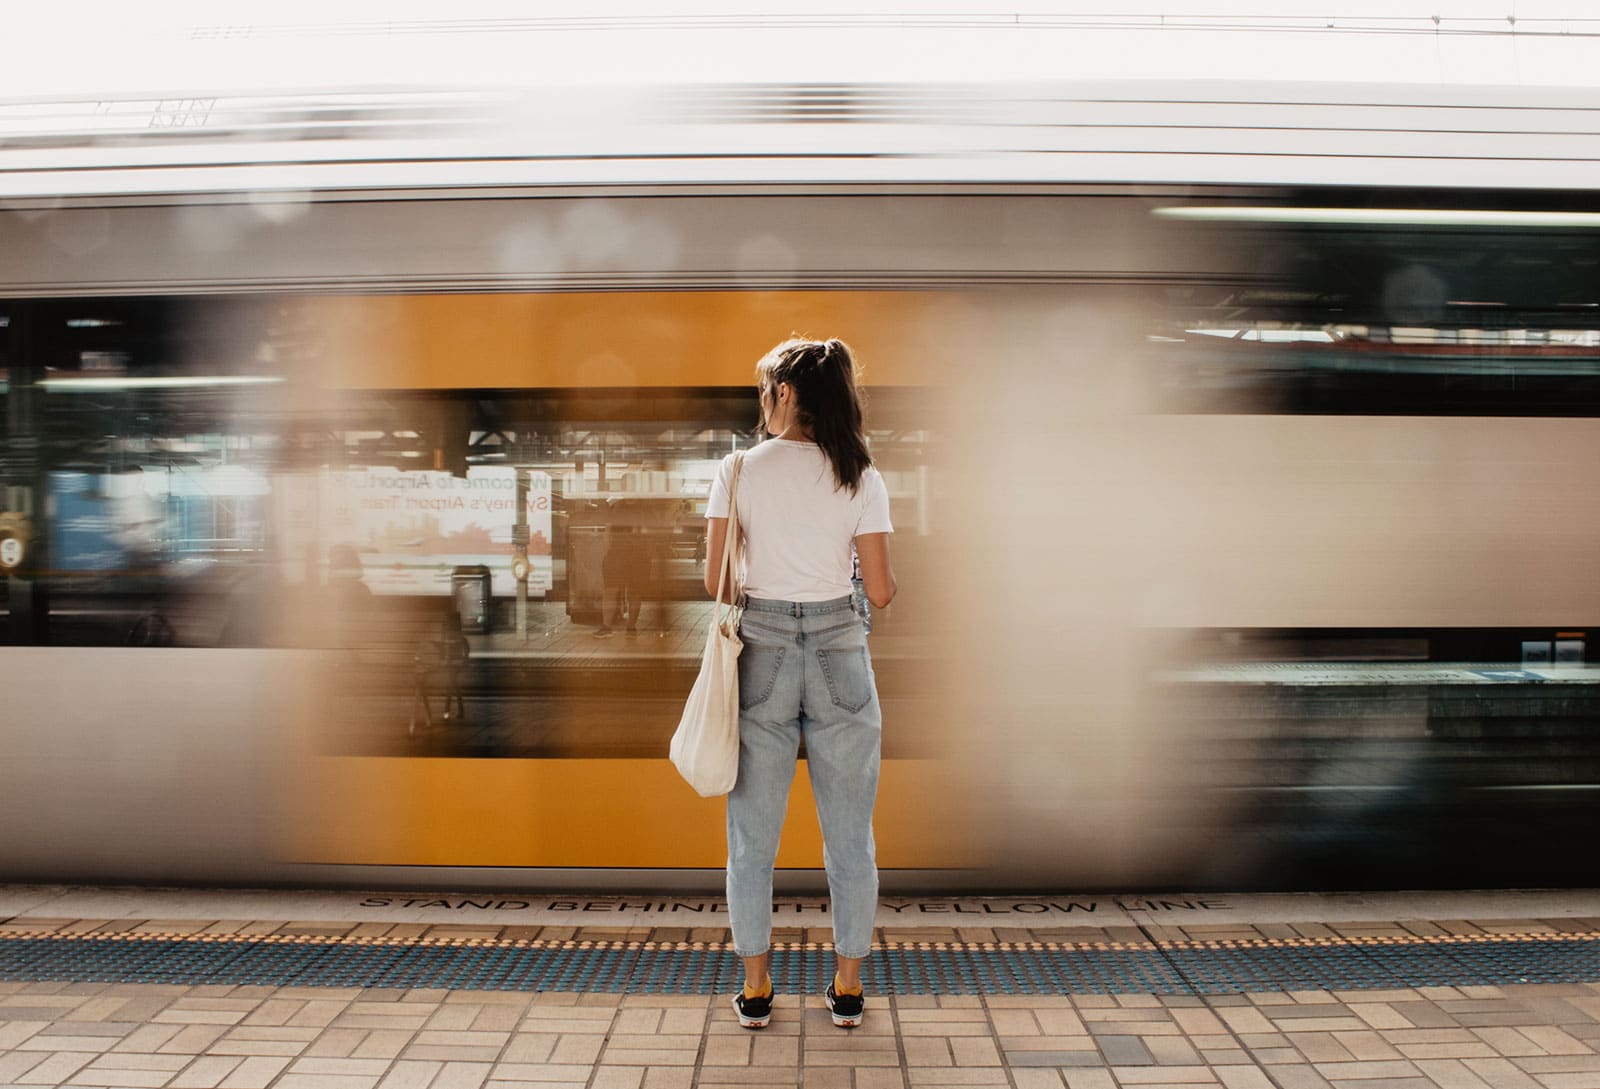 A girl waiting for a Sydney train